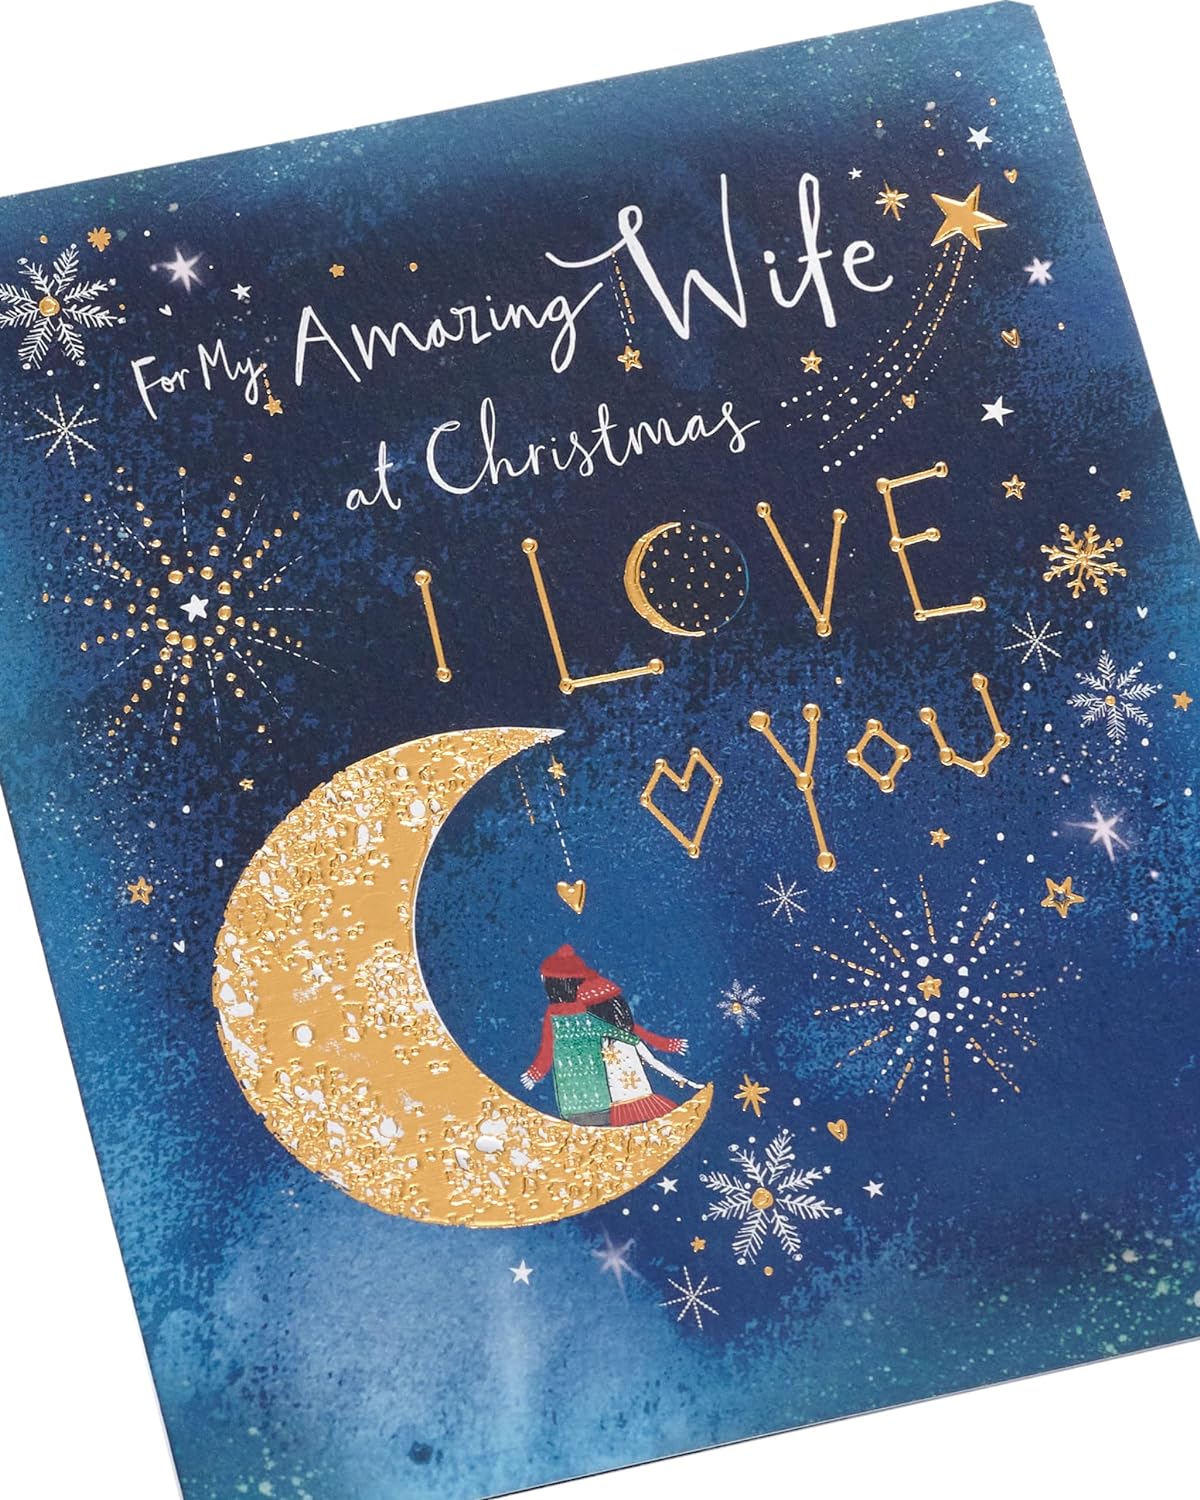 Moon Design Wife I Love You Christmas Card